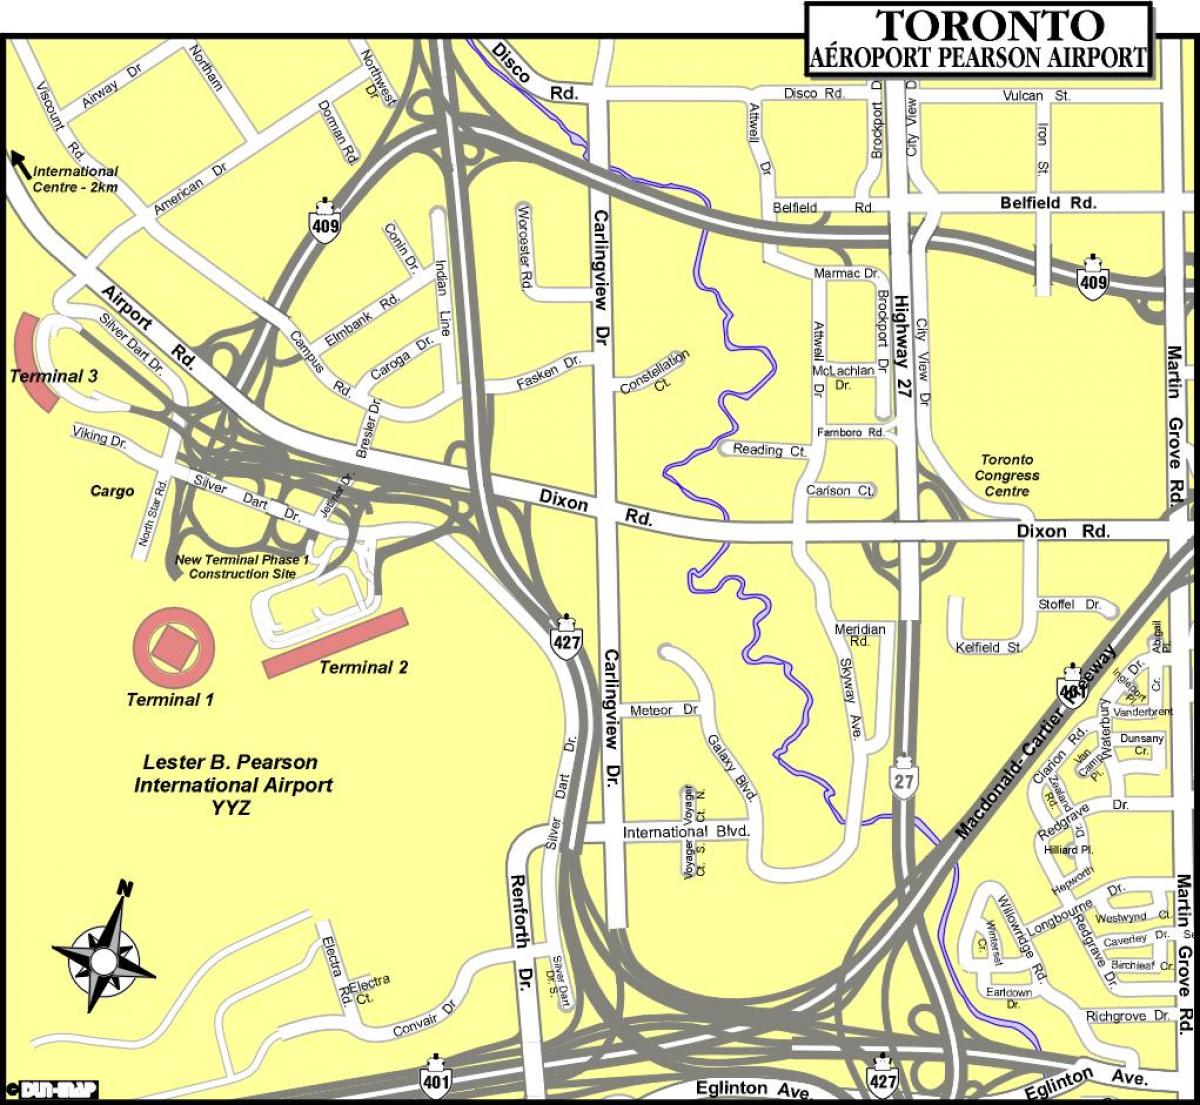 Kort over Toronto lufthavne